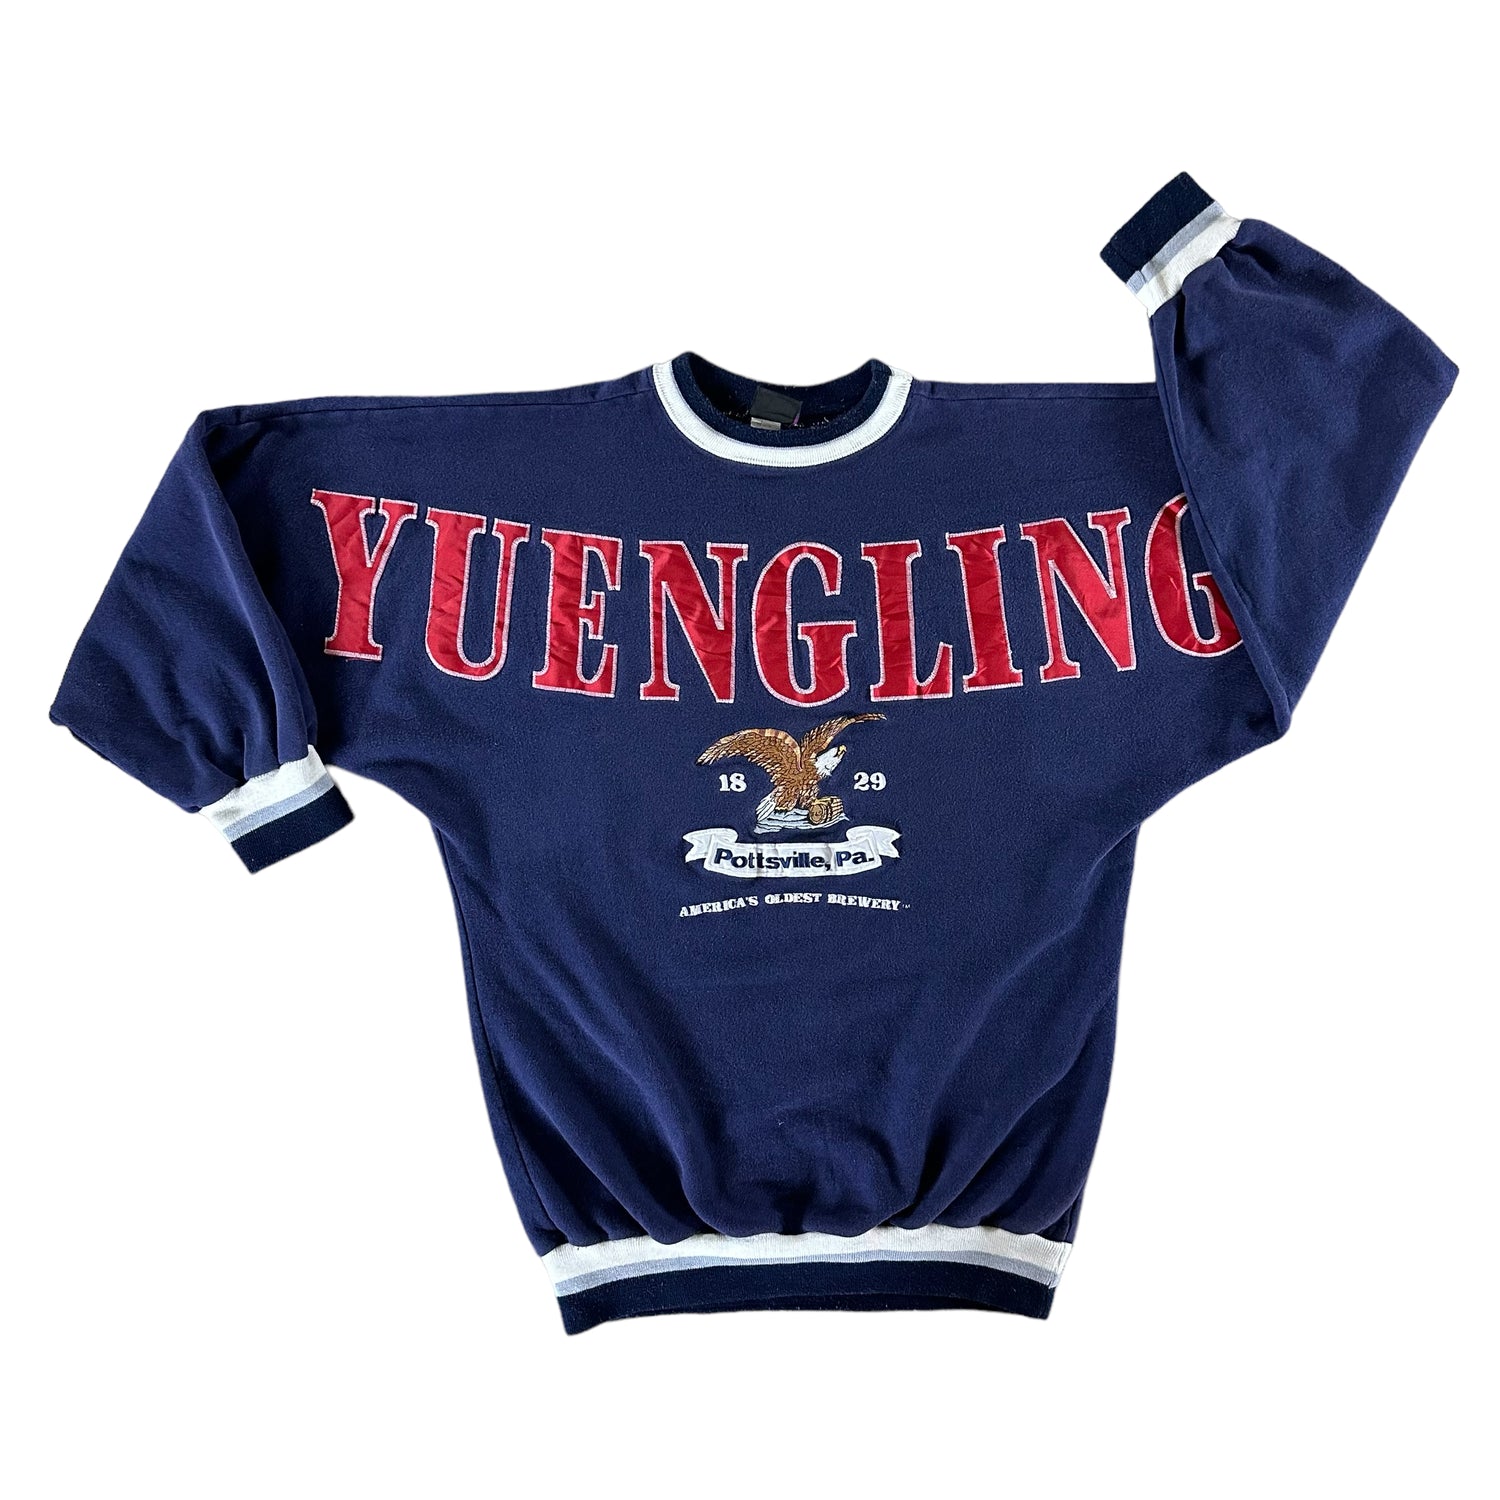 Vintage 1990s Yuengling Brewery Sweatshirt size Large